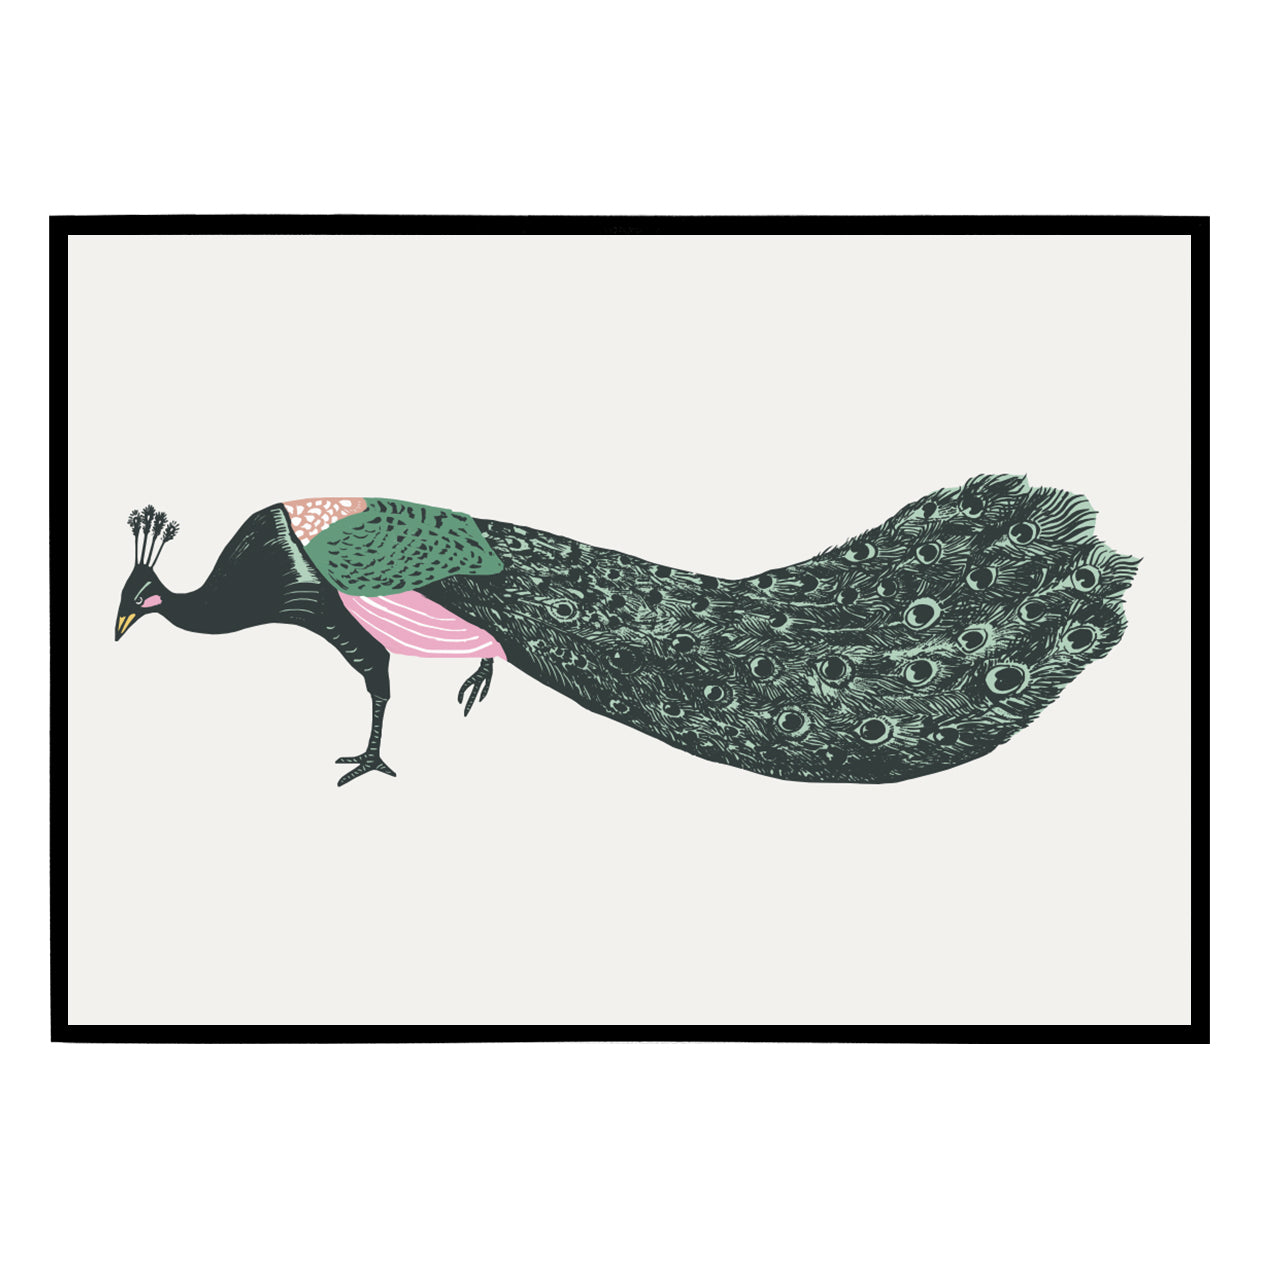 Vintage Peacock Illustration Poster